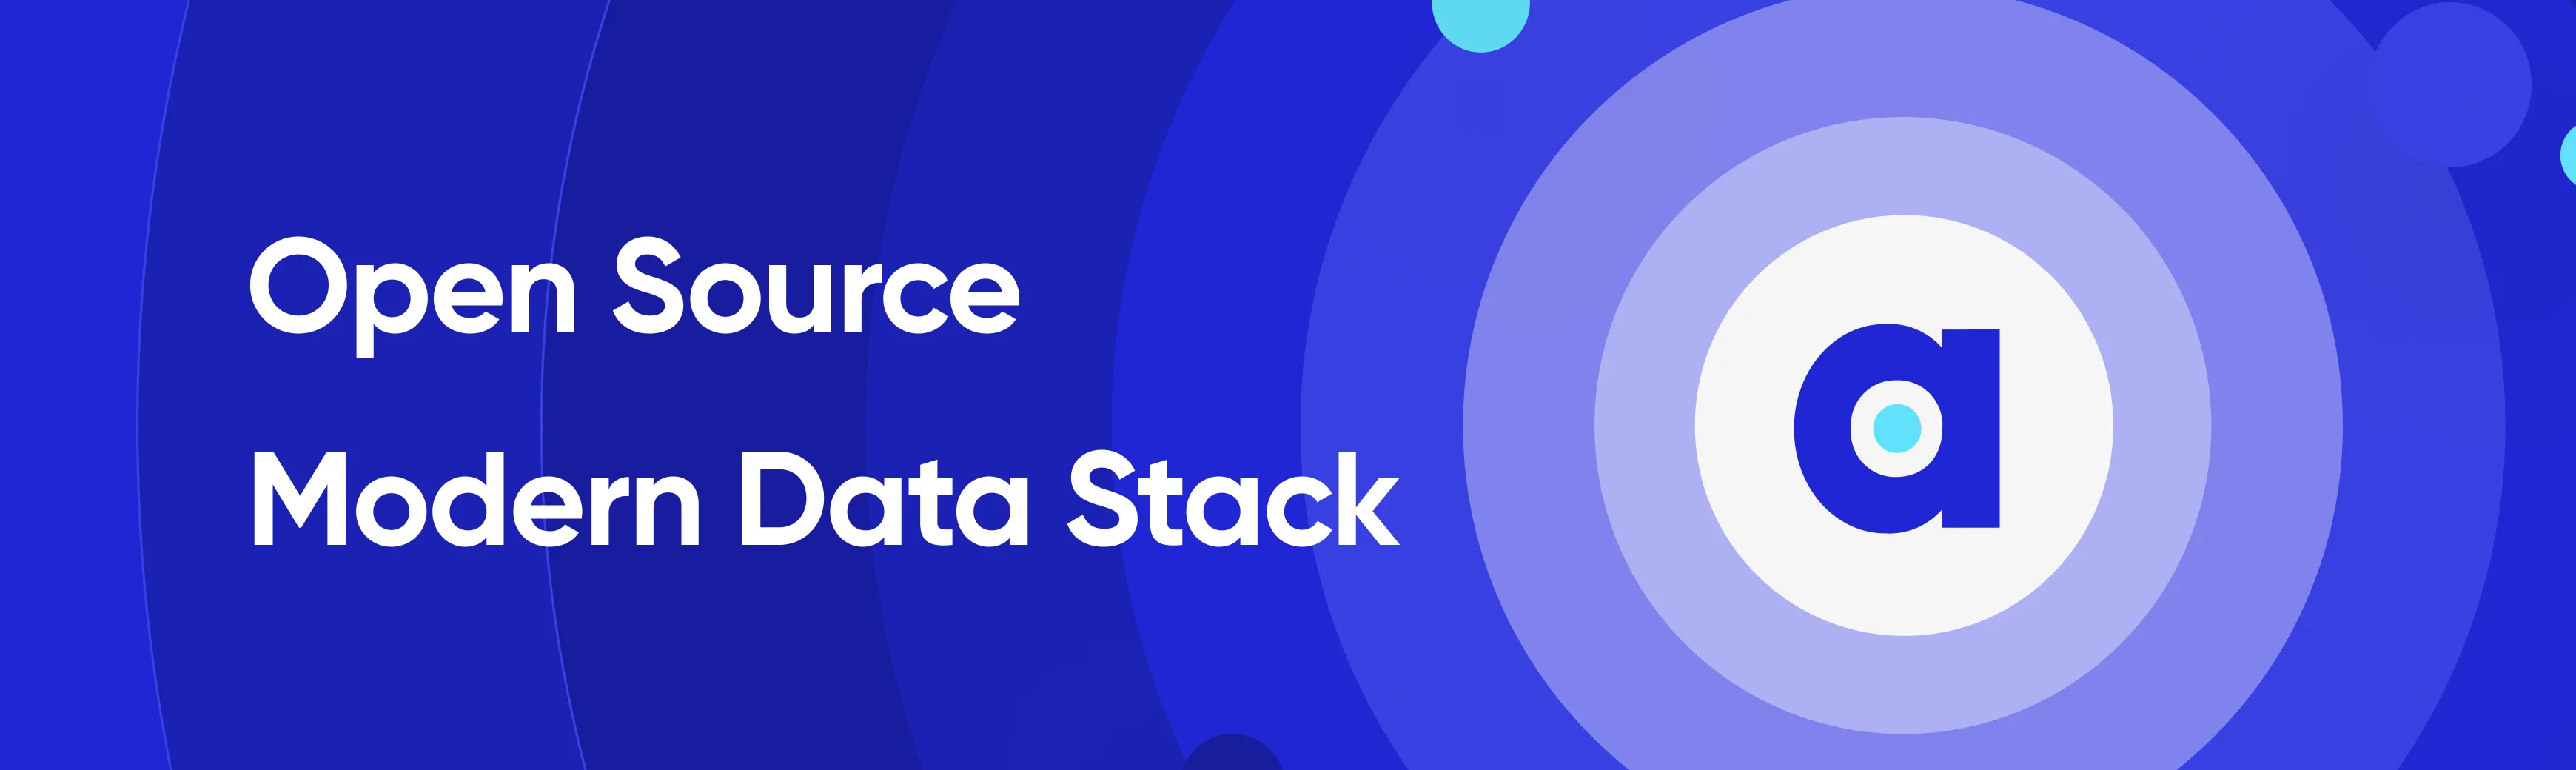 Open-Source Modern Data Stack